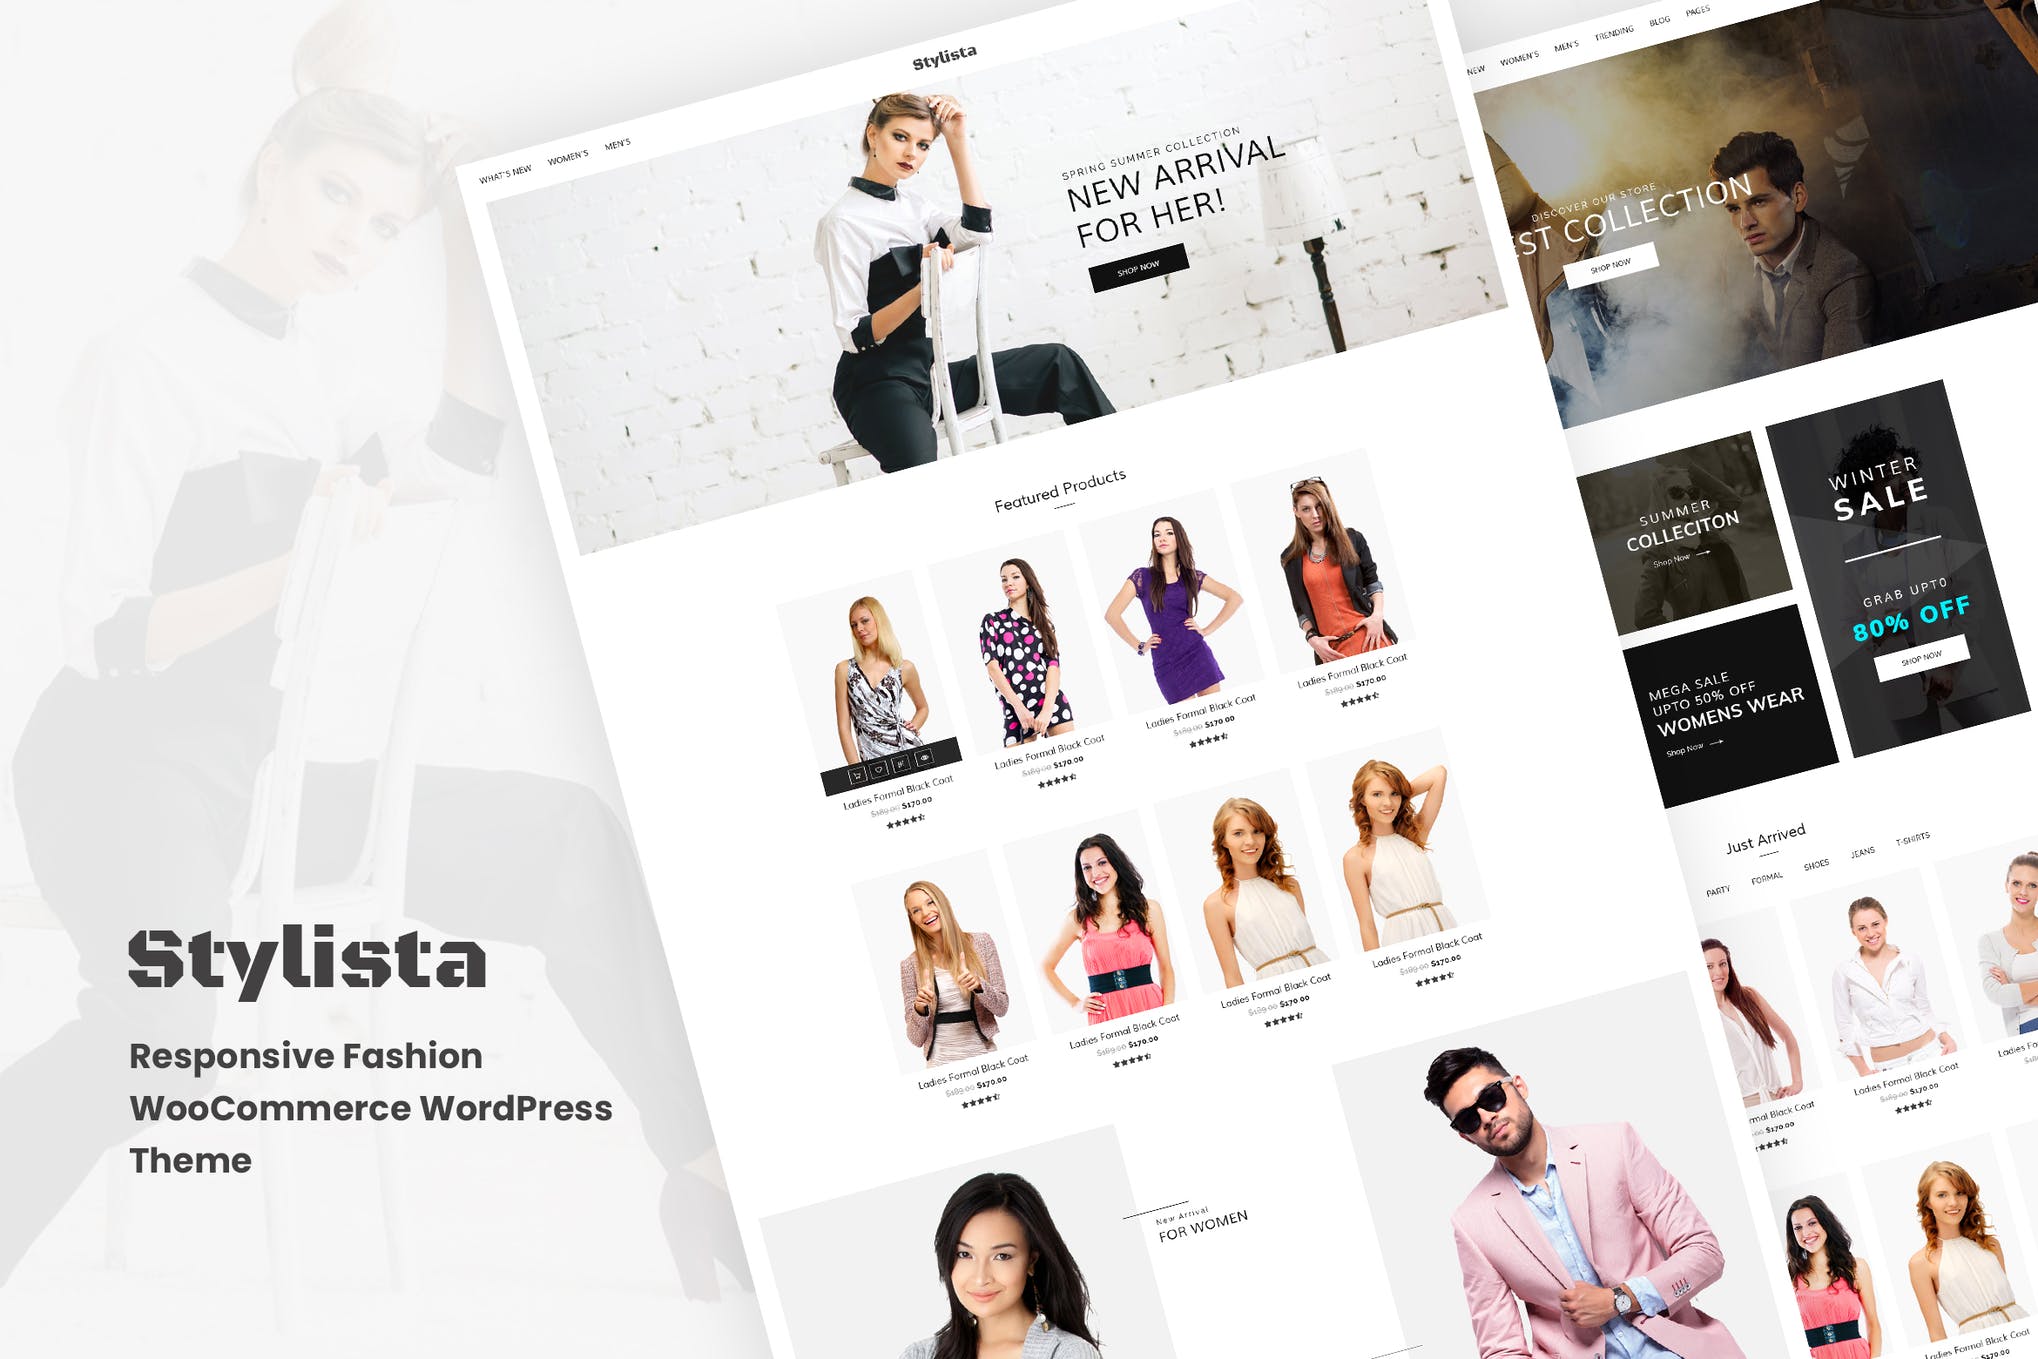 Stylista – 时装 服装 衣服 服饰类产品外贸商城网站模板 WordPress电子商务主题